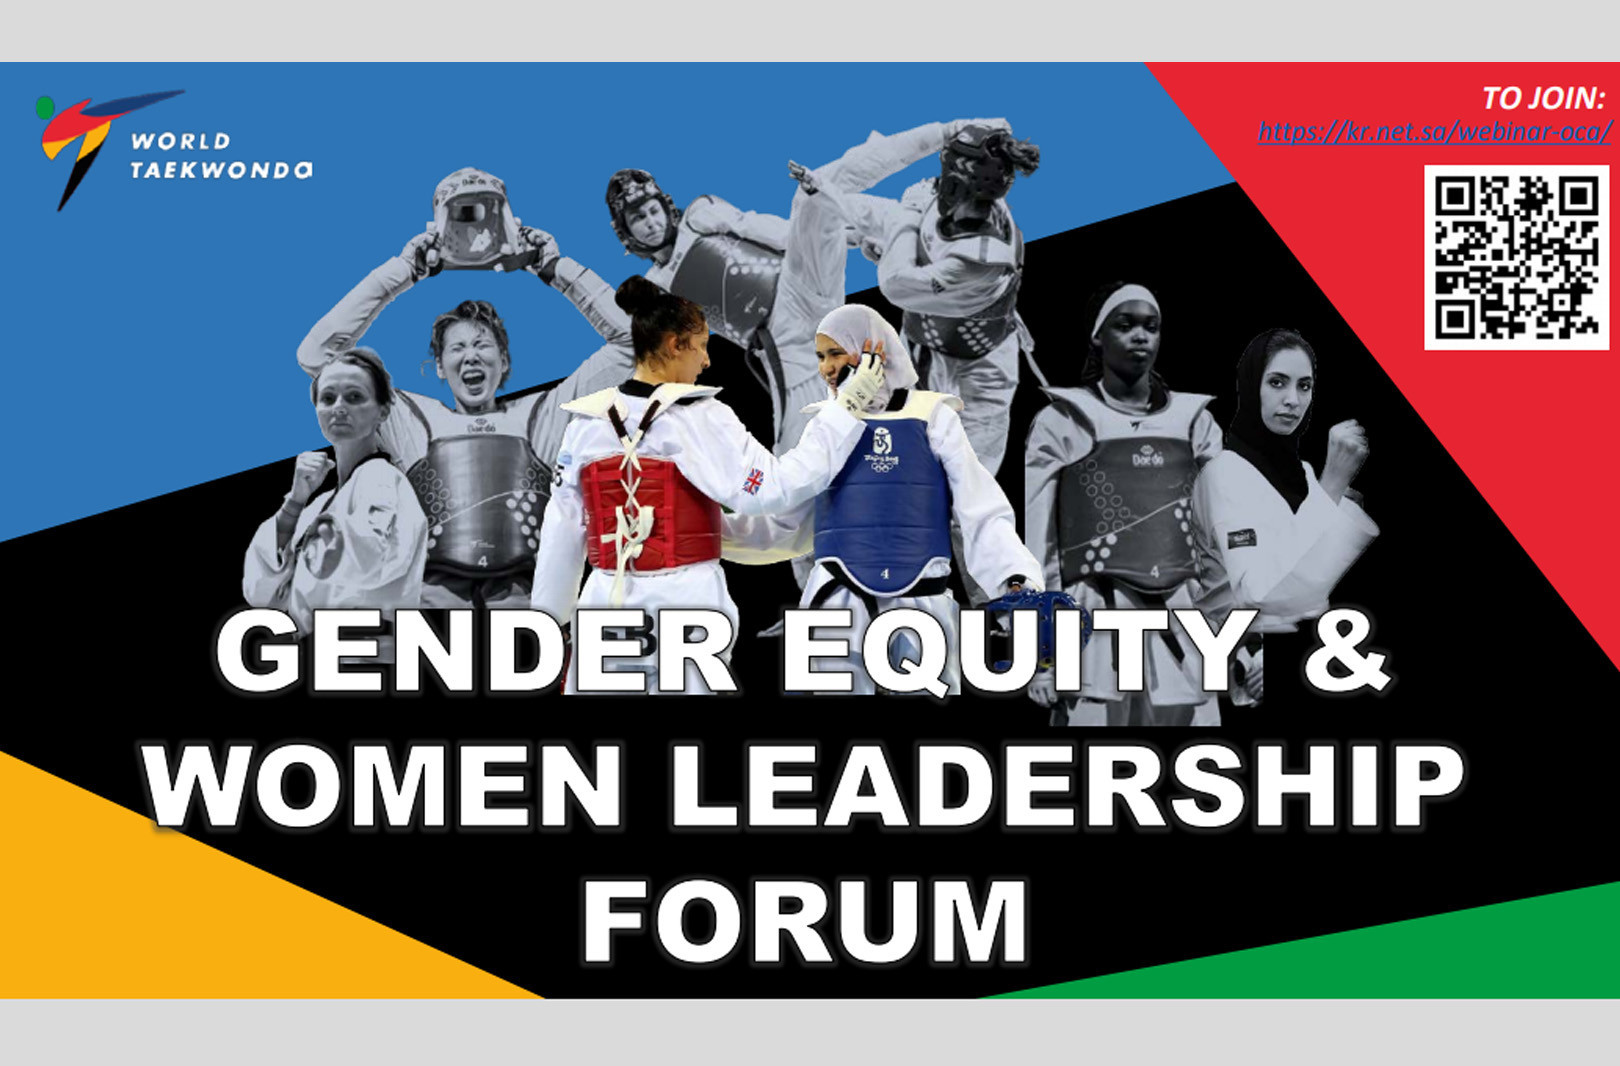 World Taekwondo is set to hold its first Gender Equity and Women Leadership Forum ©World Taekwondo